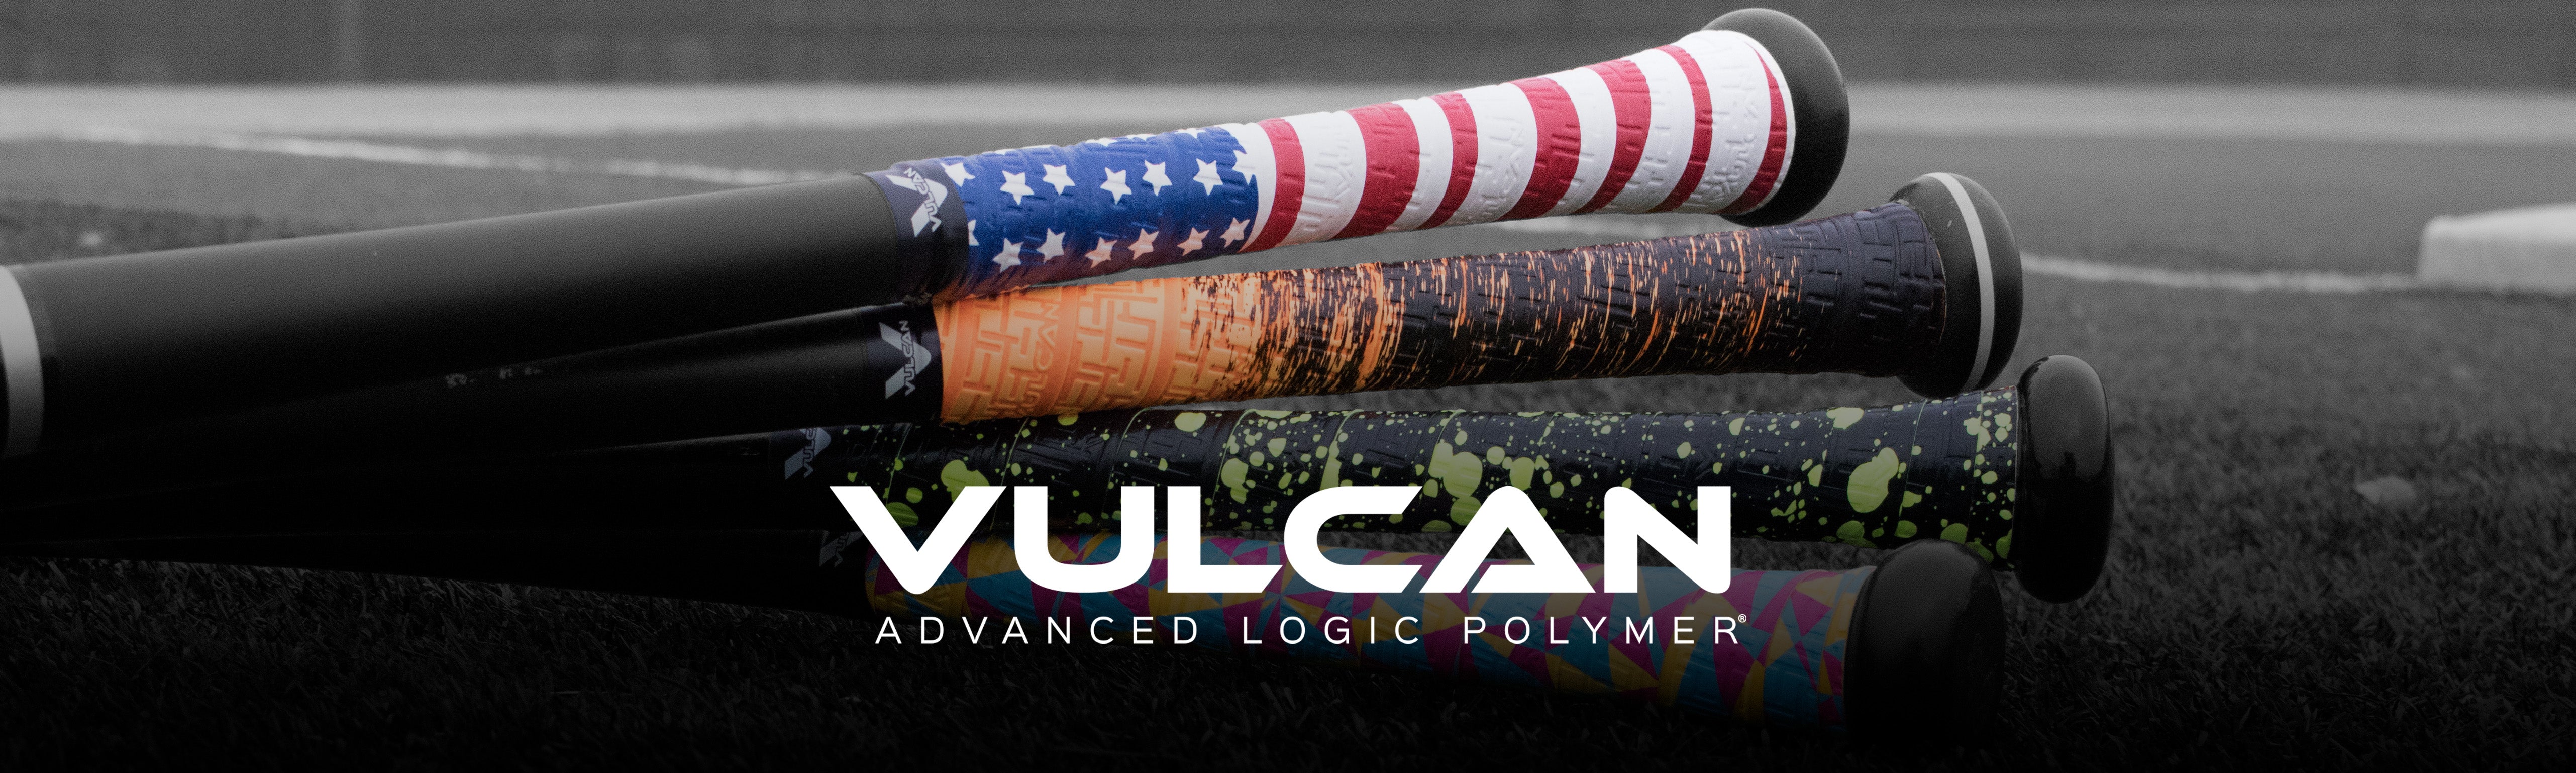 Vulcan Advanced Logic Polymer